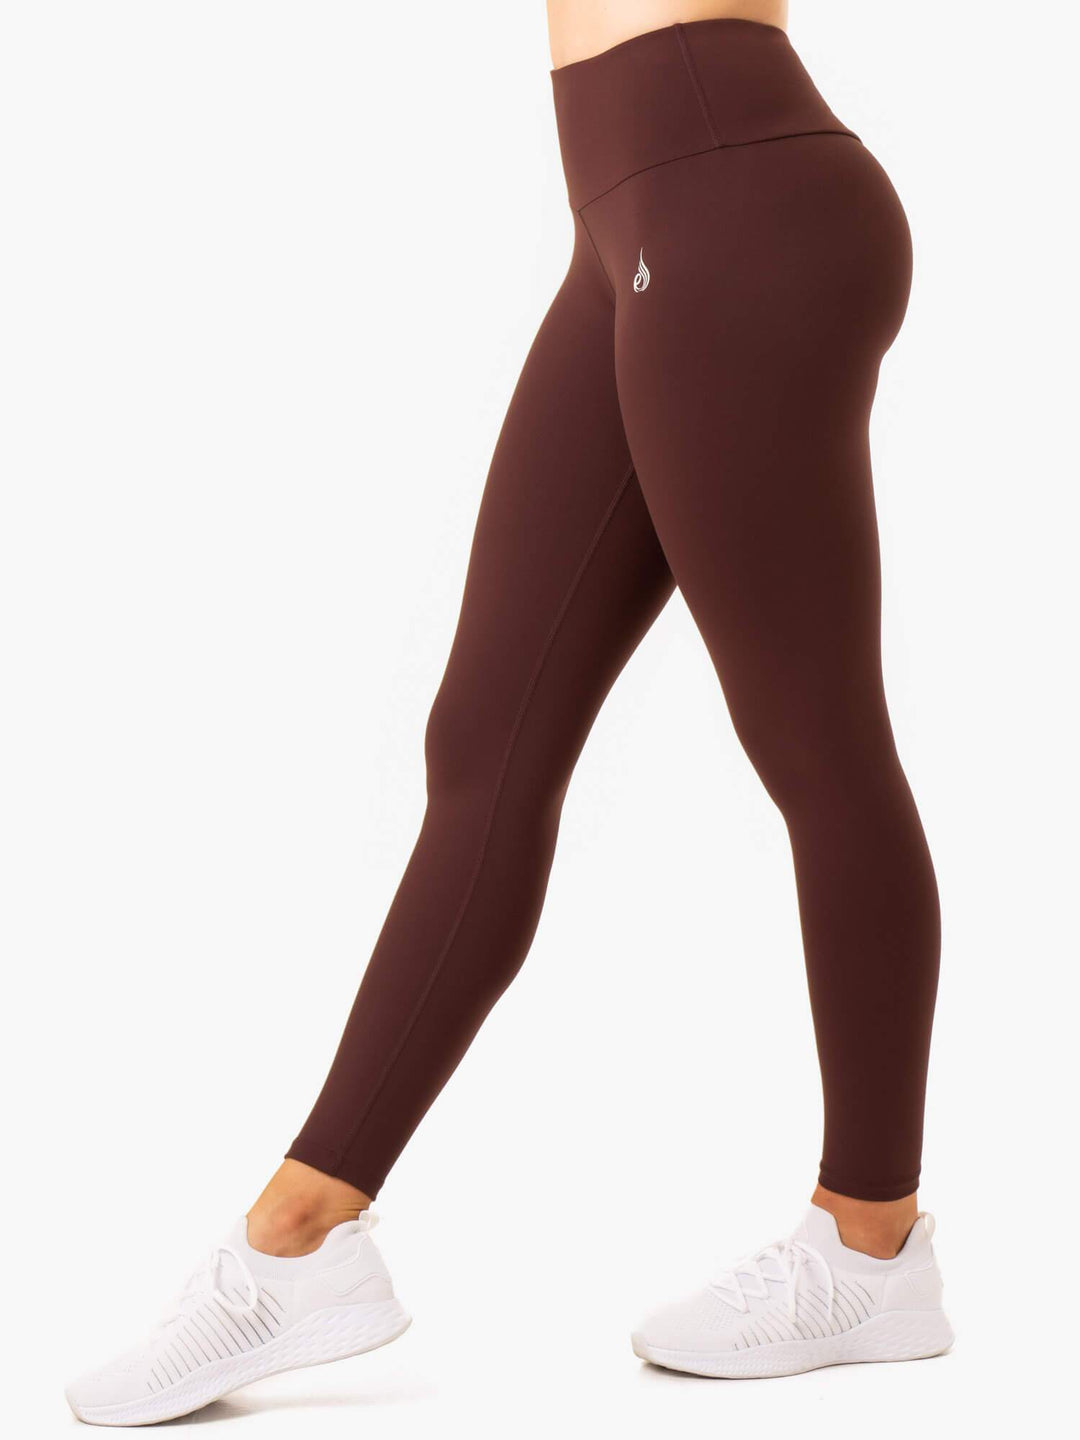 Staples Scrunch Bum Leggings - Chocolate Clothing Ryderwear 